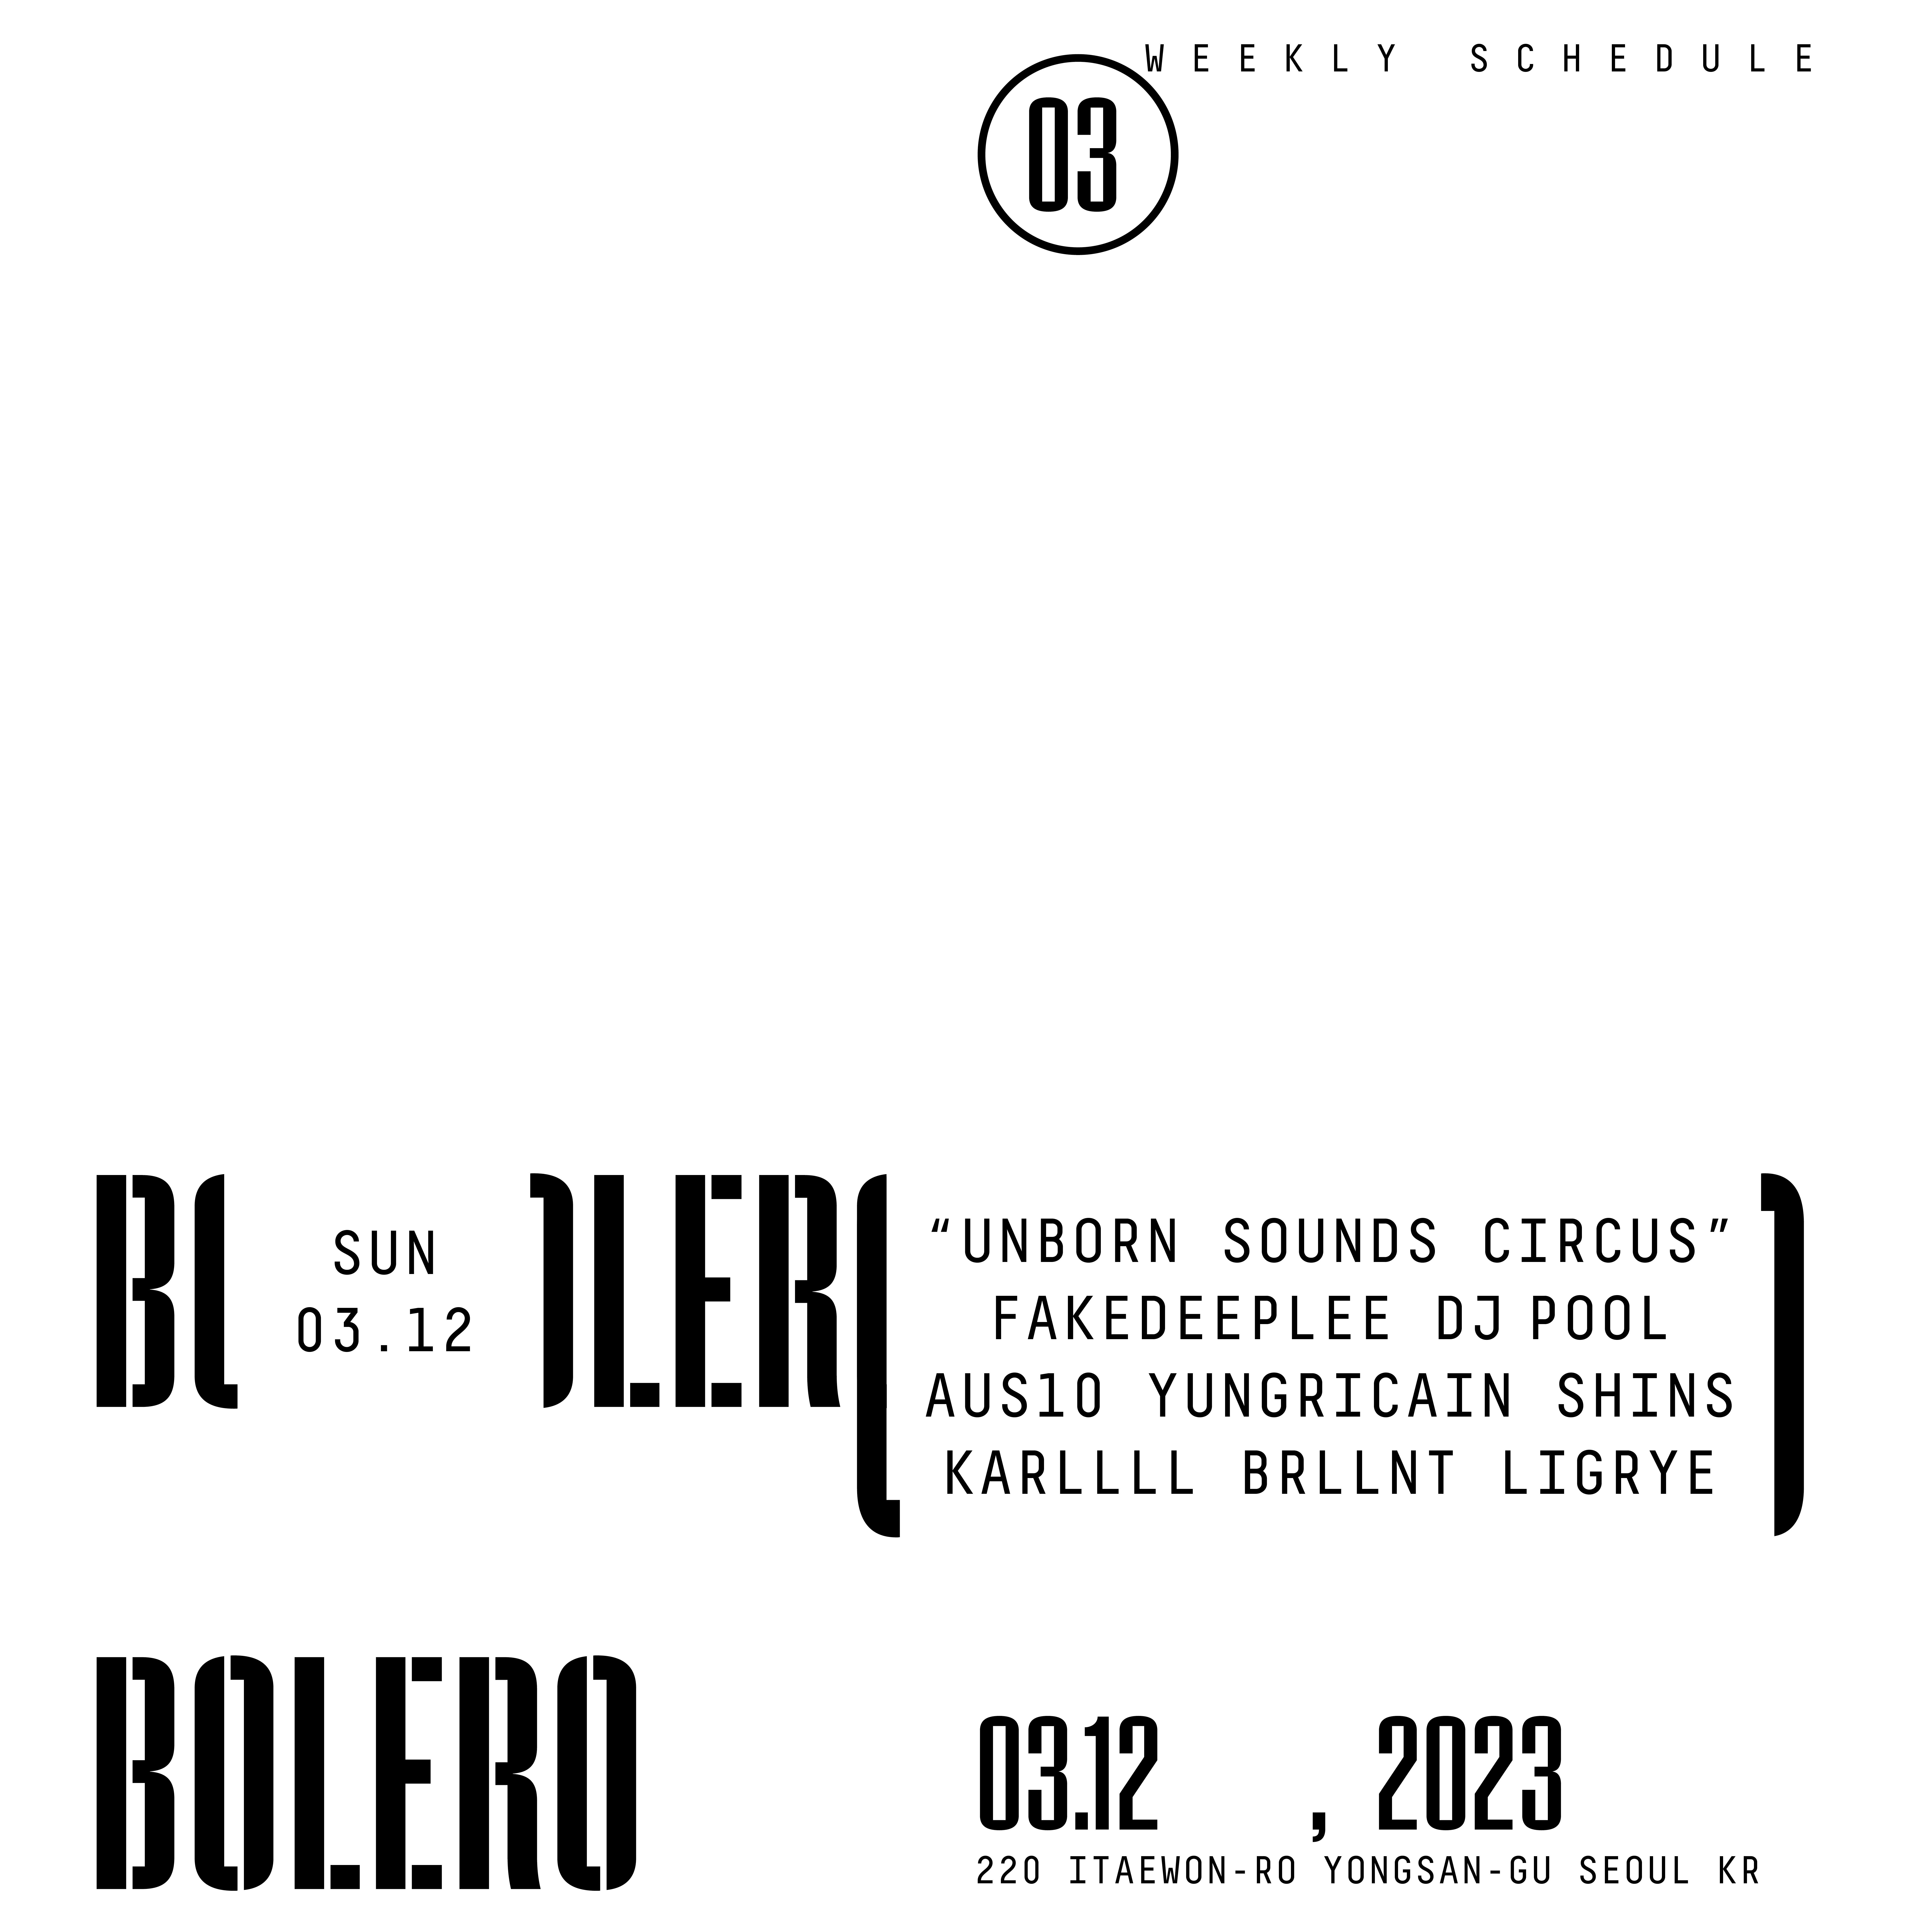 BOLERO: UNBORN SOUNDS CIRCUS at Bolero, Seoul